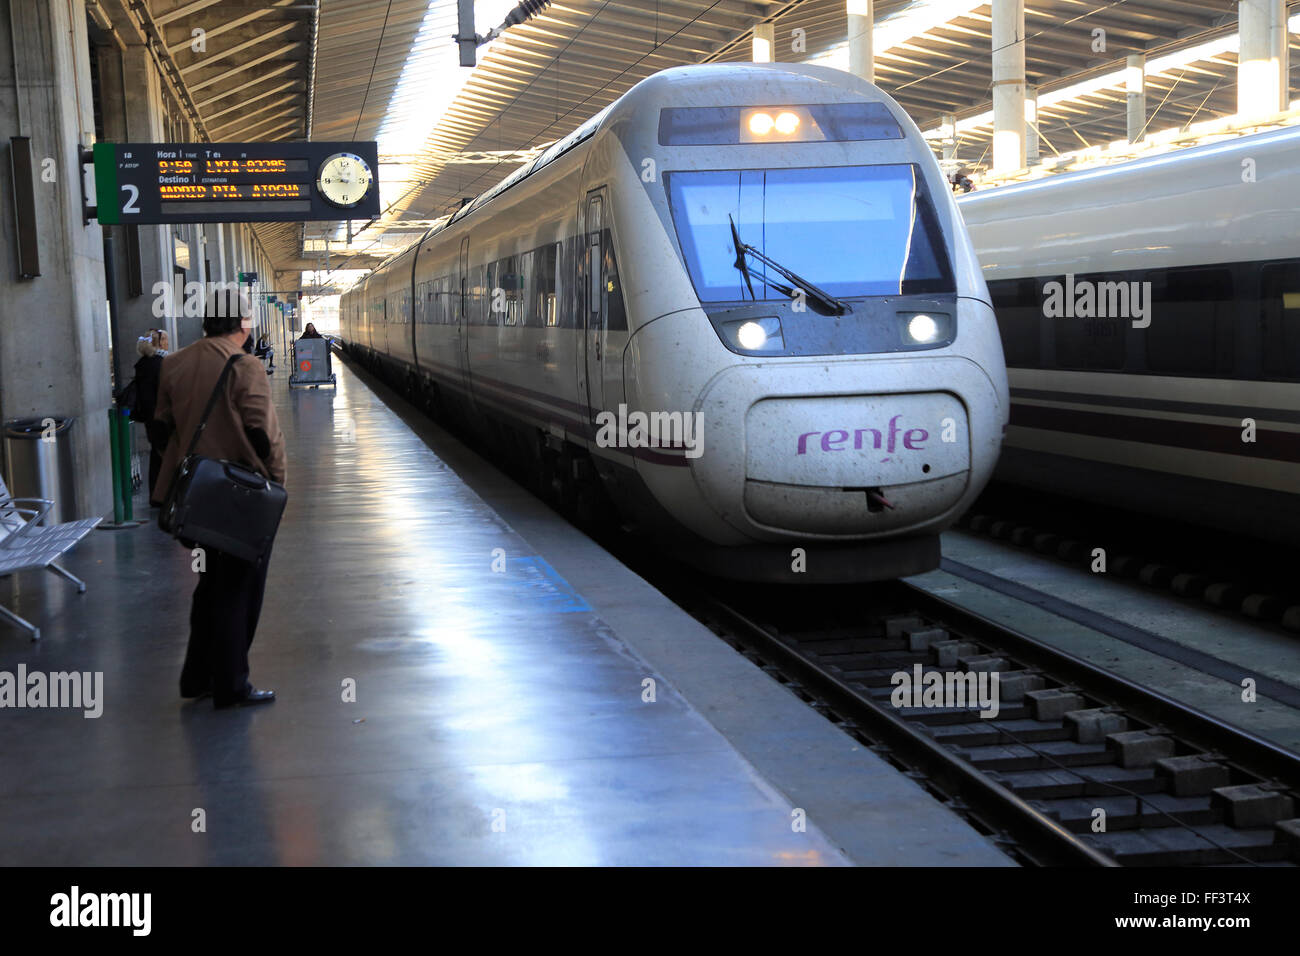 RENFE train at platform, Cordoba railway station, Spain Stock Photo